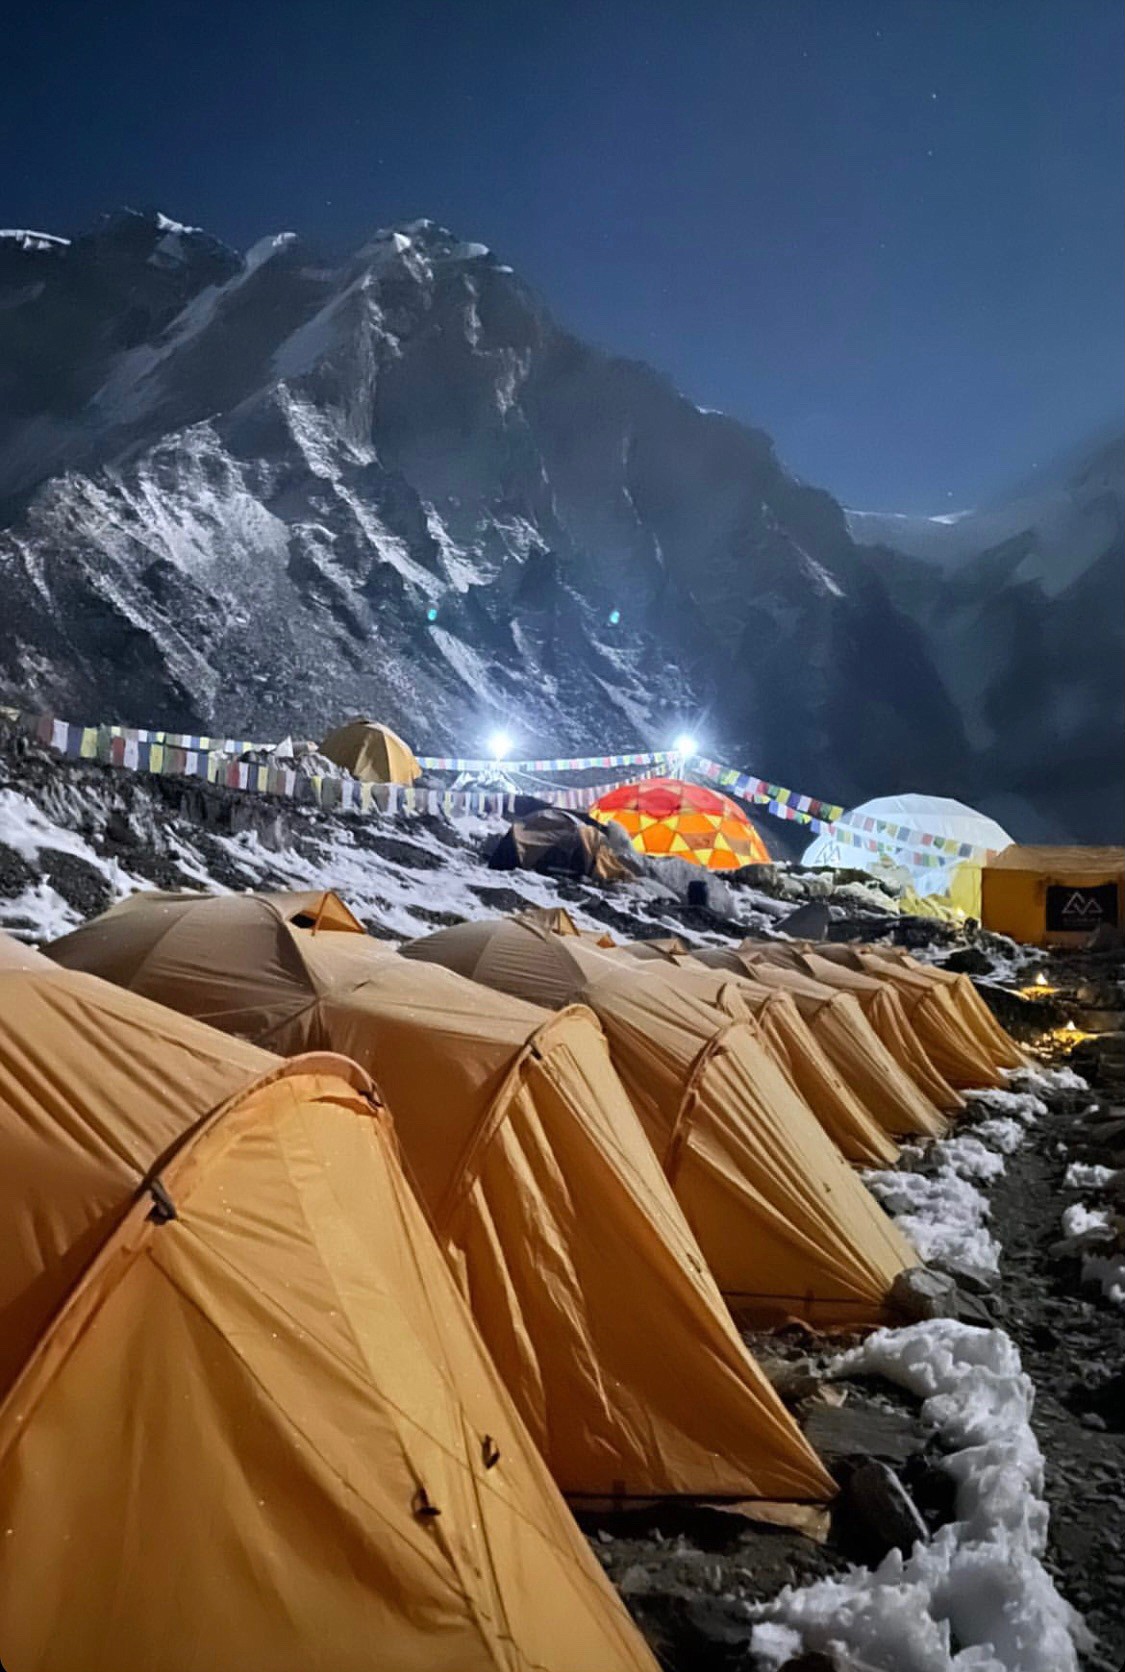 Nighttime at Everest Base Camp in Nepal. (Photo courtesy of Steve Stevens)